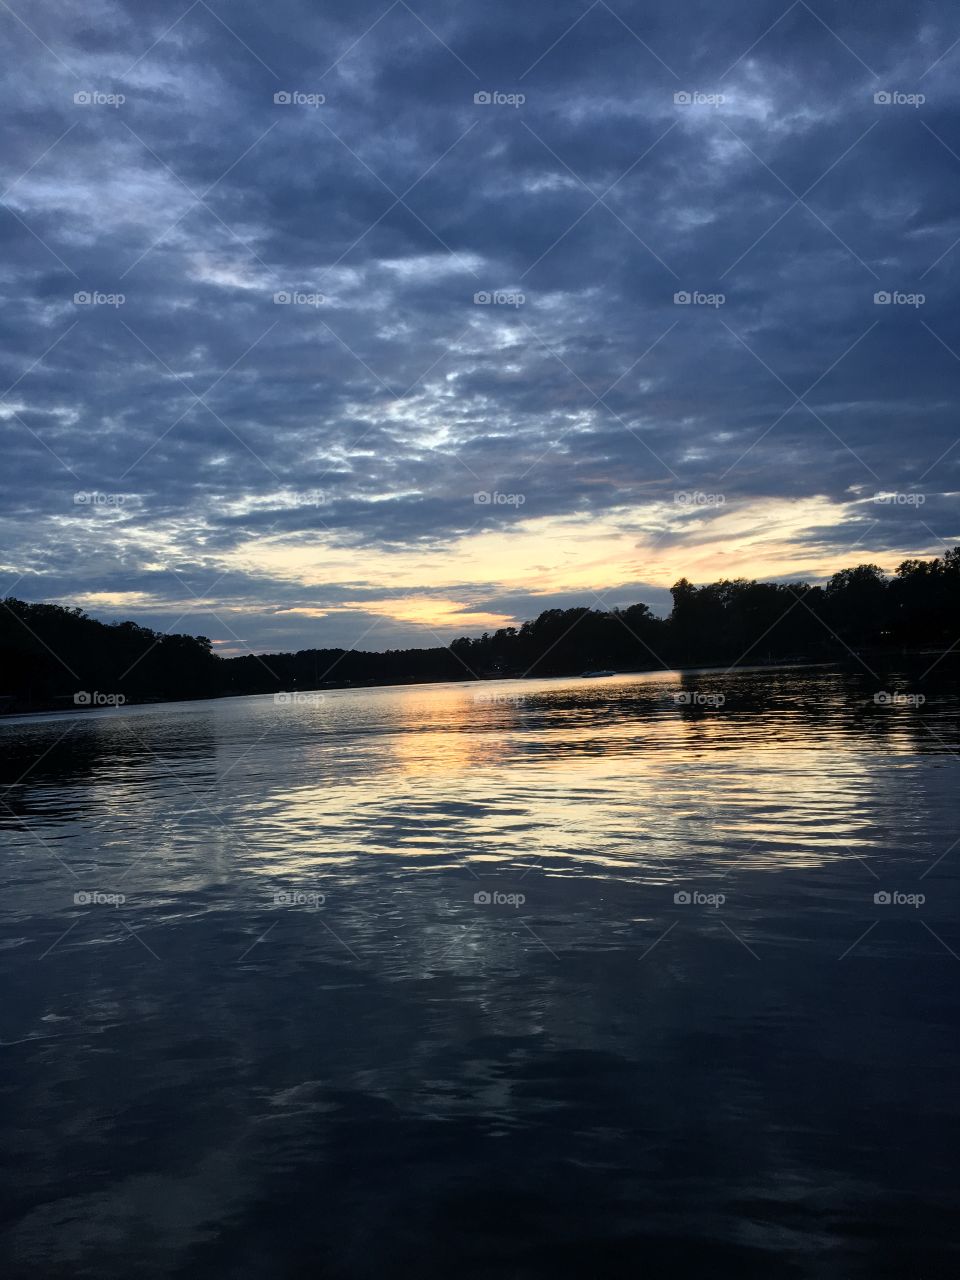 Reflection of a dusk sky on a lake